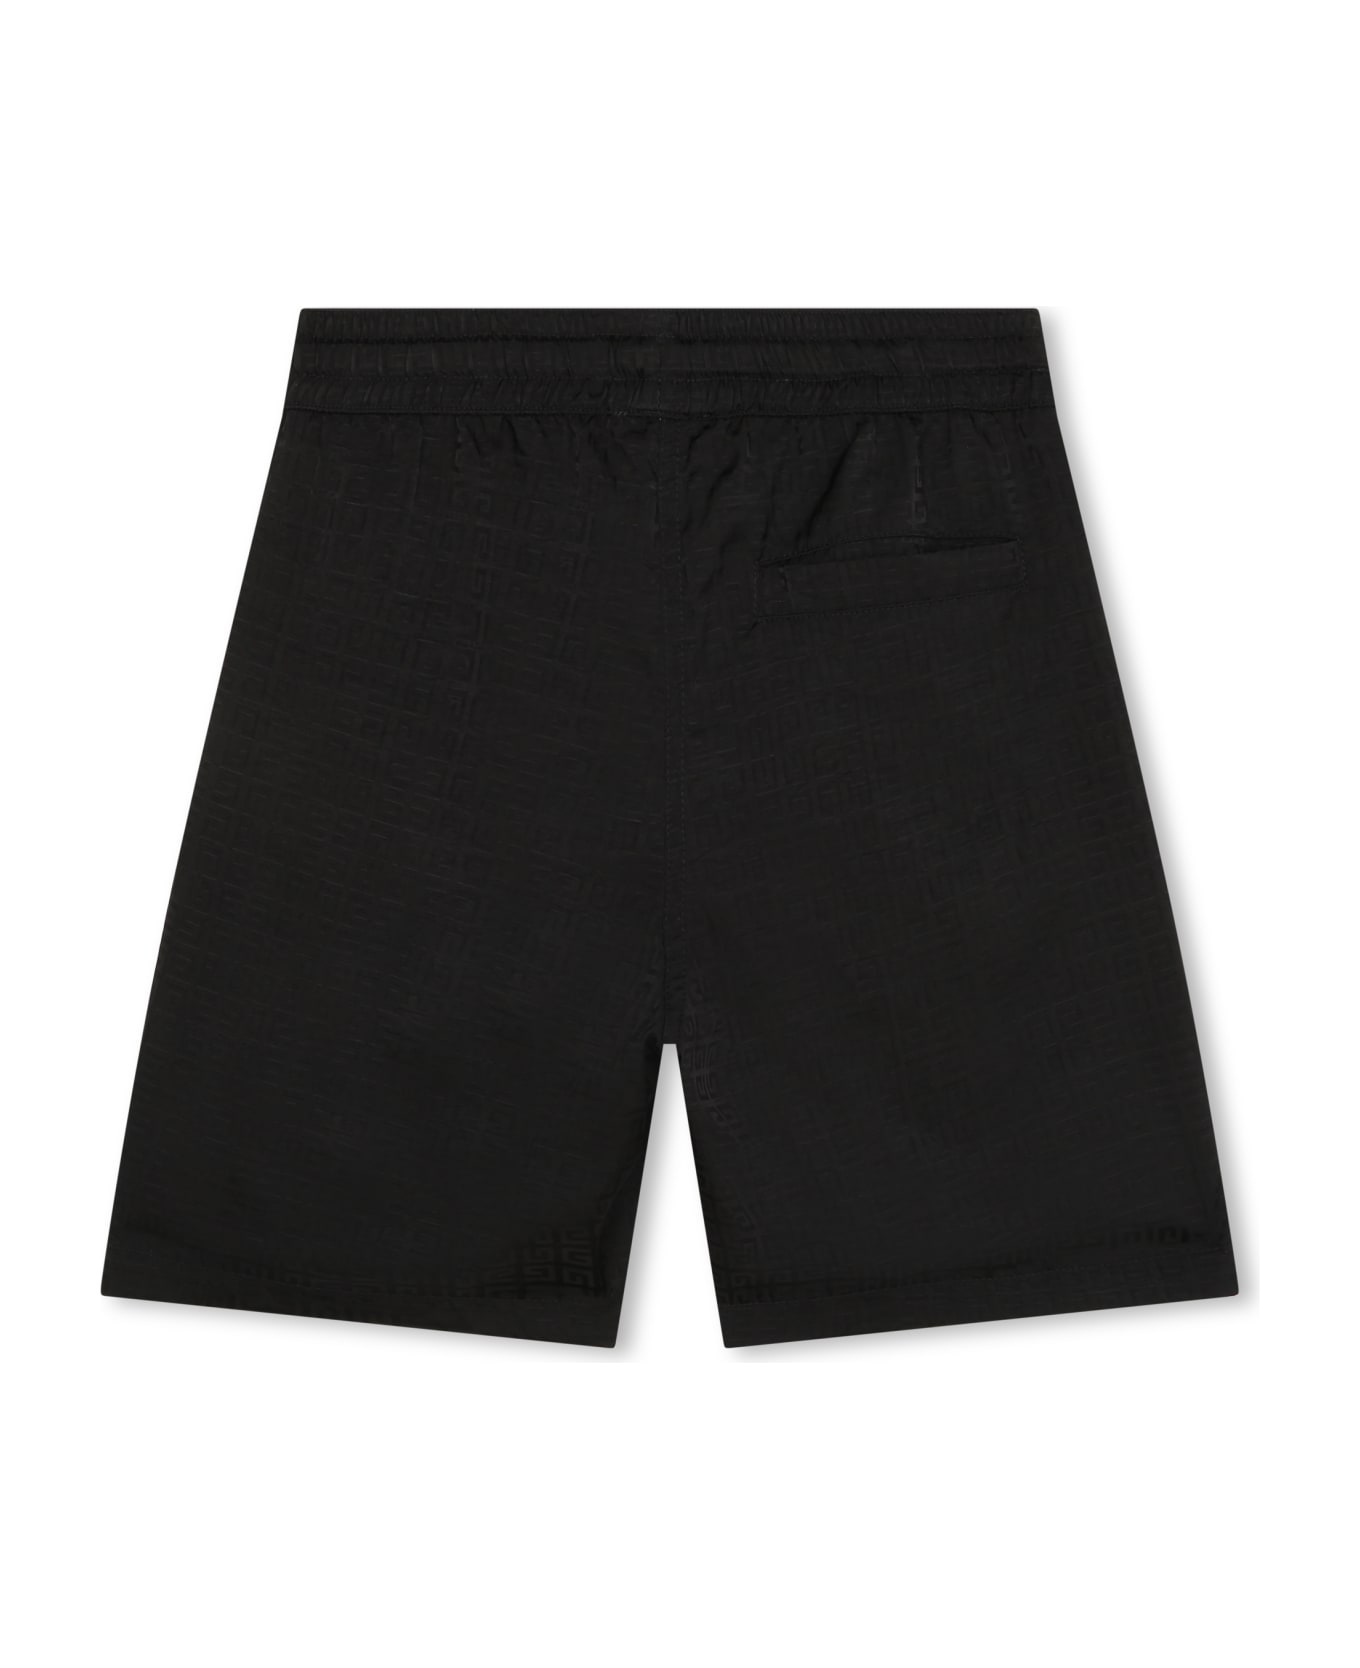 Givenchy Sports Shorts With Monogram - B Nero ボトムス